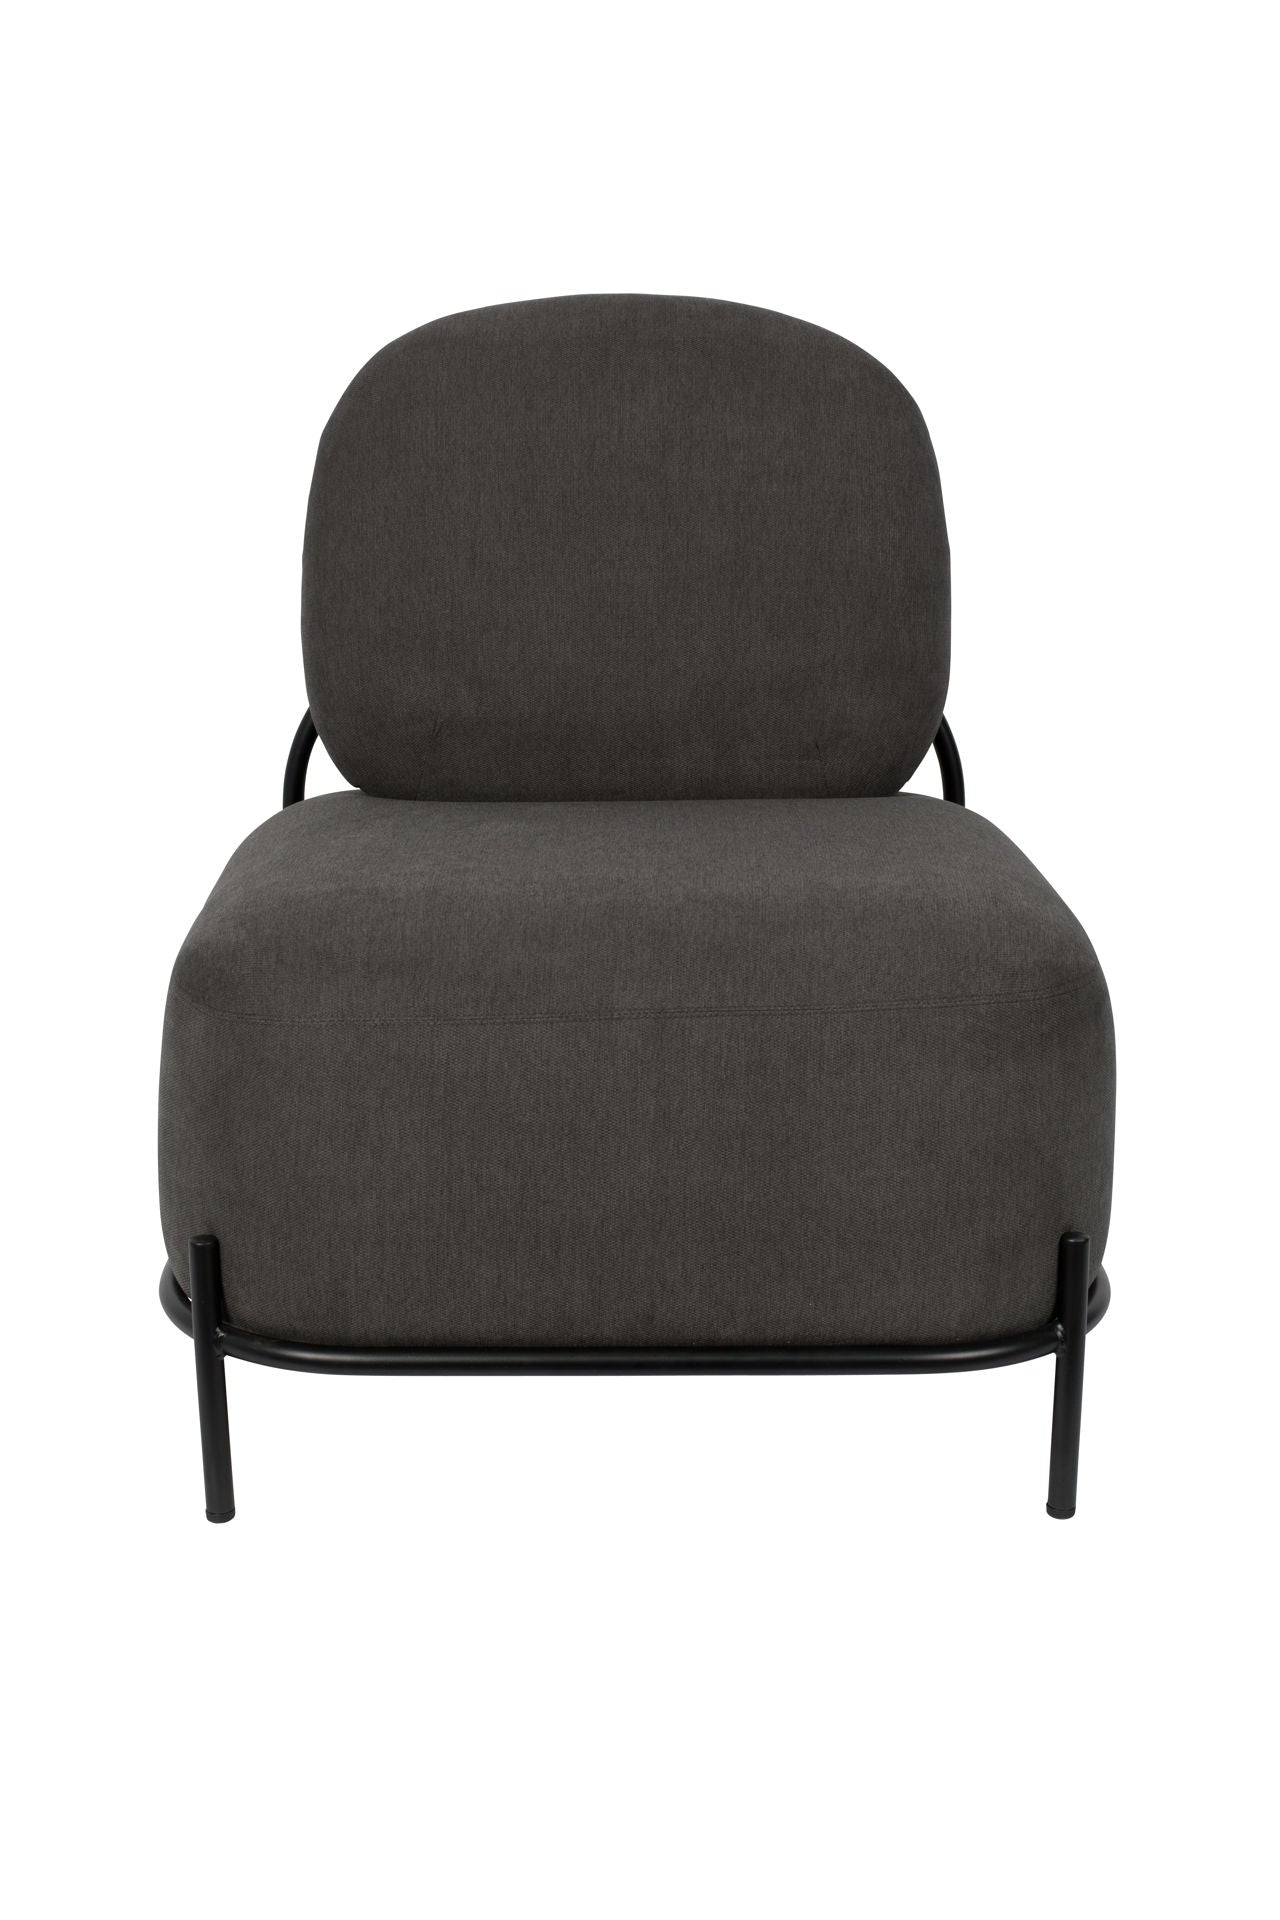 Nancy's Viera East Lounge Chair - Modern - Grijs, Zwart - Polyester, Multiplex, IJzer - 71,5 cm x 66 cm x 77 cm